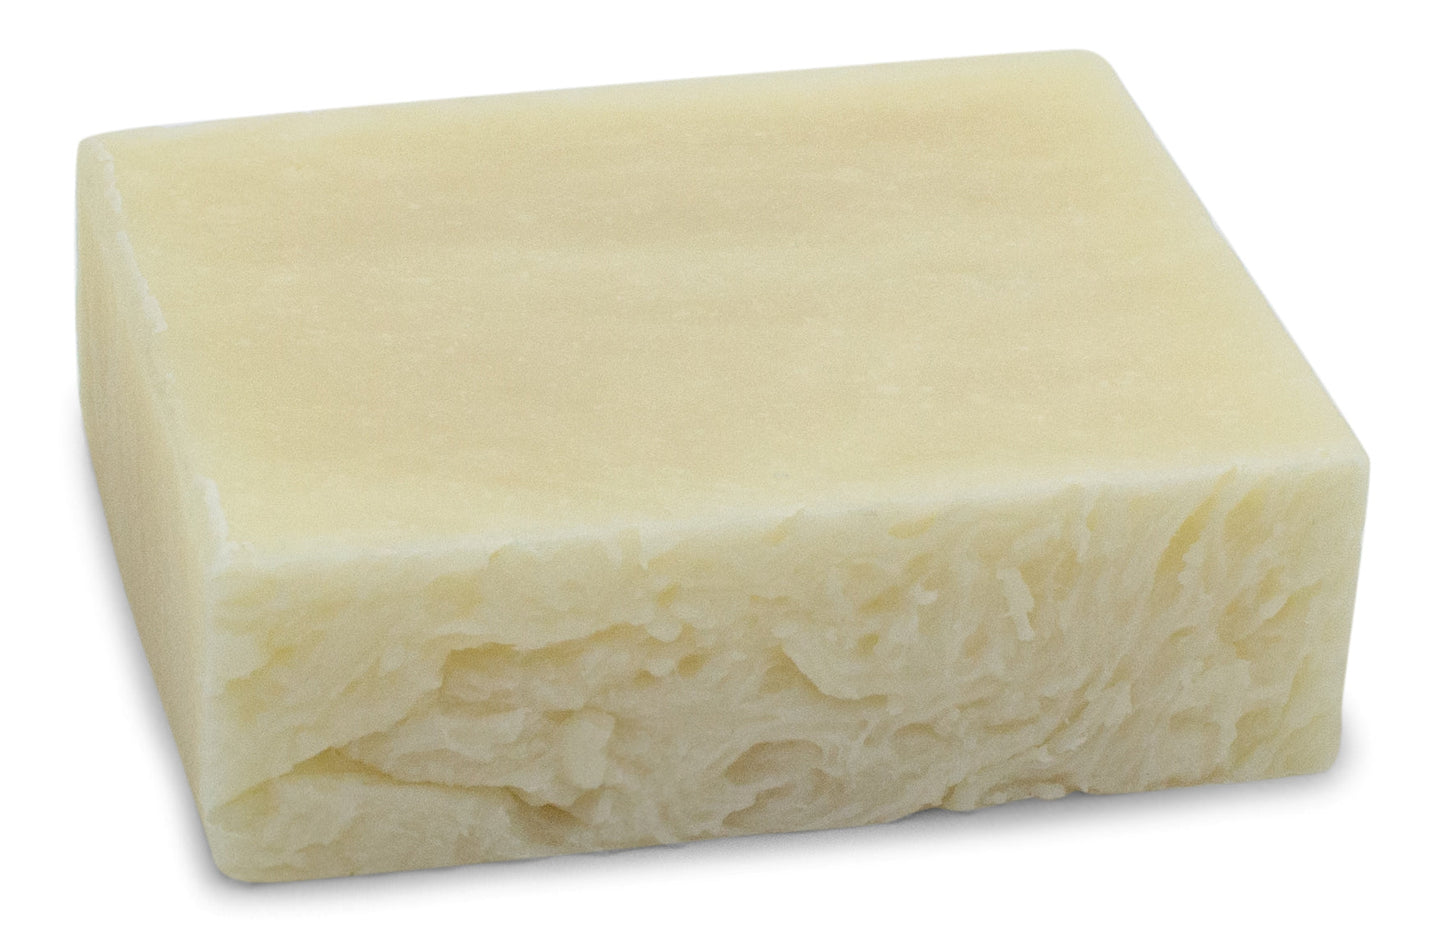 Unscented Shea Butter Soap Bar